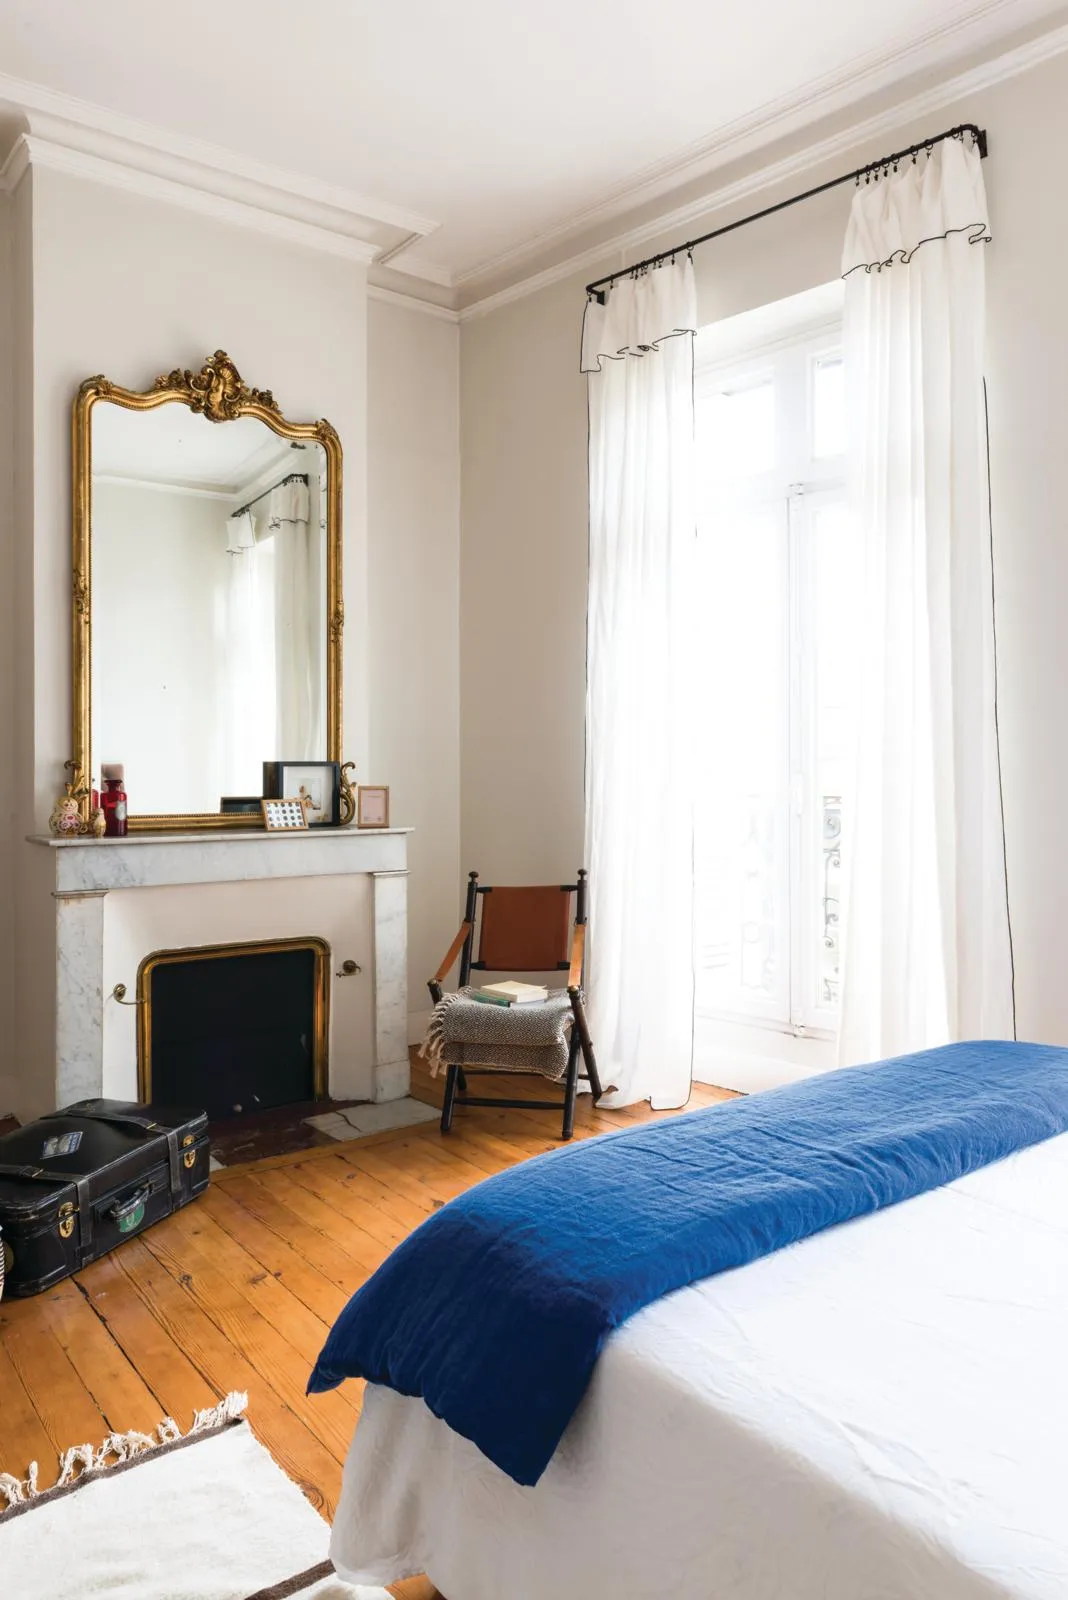 A Haussmann style apartment in Bordeaux